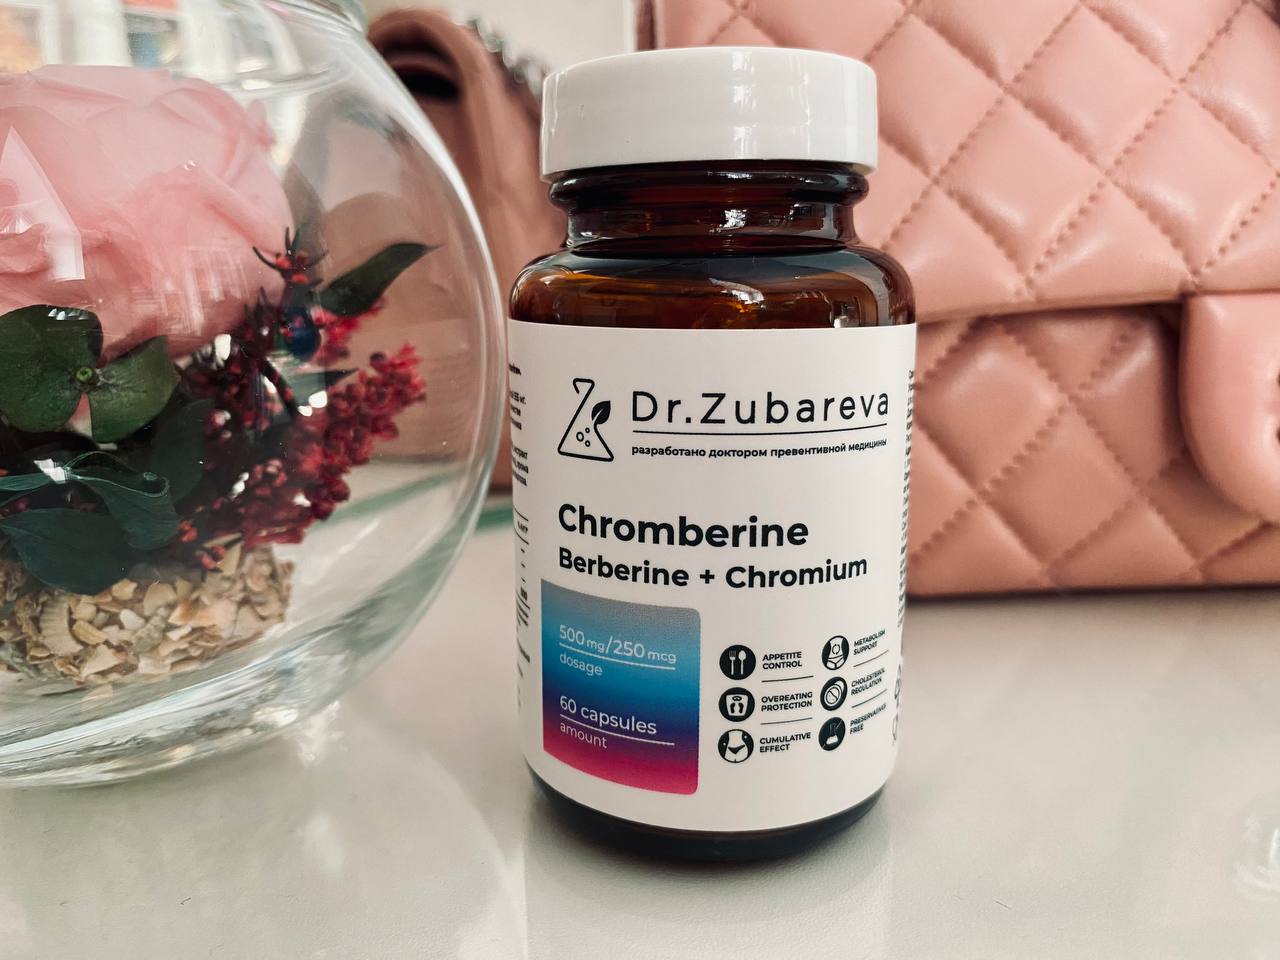 Комплексная пищевая добавка "Хромберин / Chromberine", обзор препарата